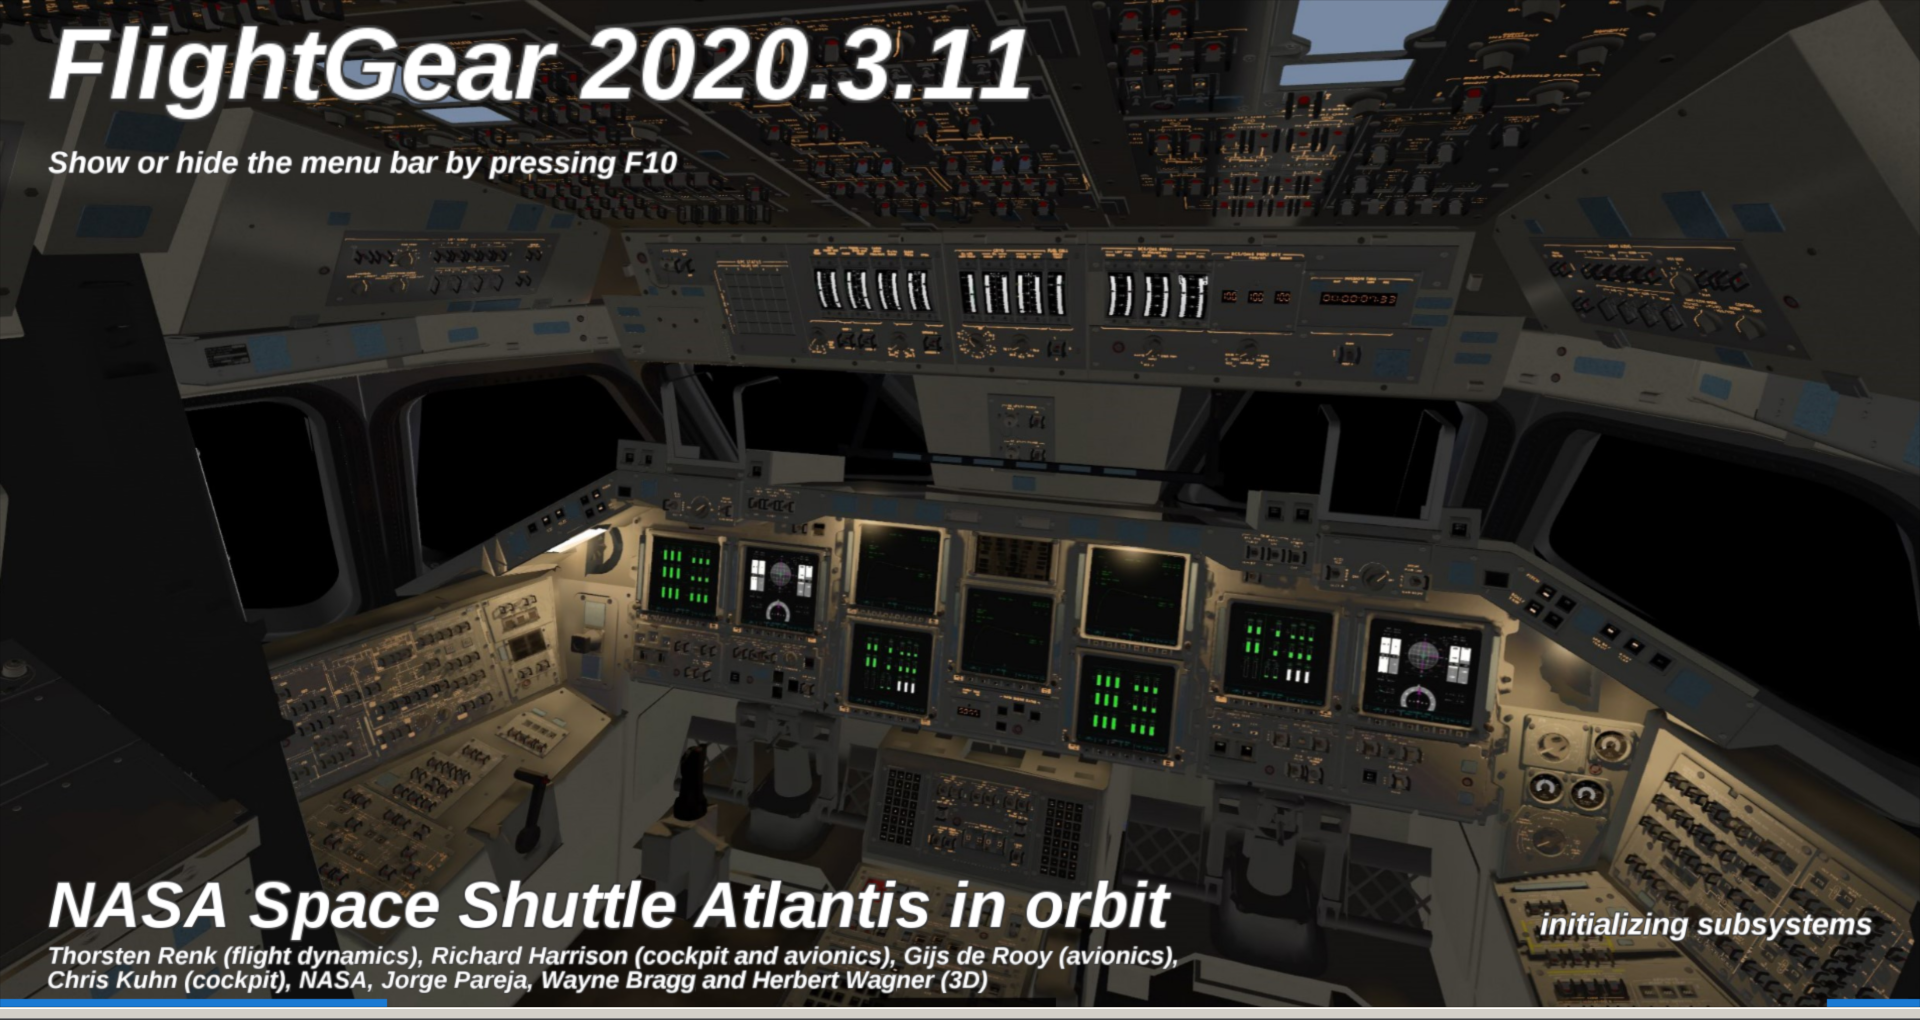 Full flight simulator - Wikipedia